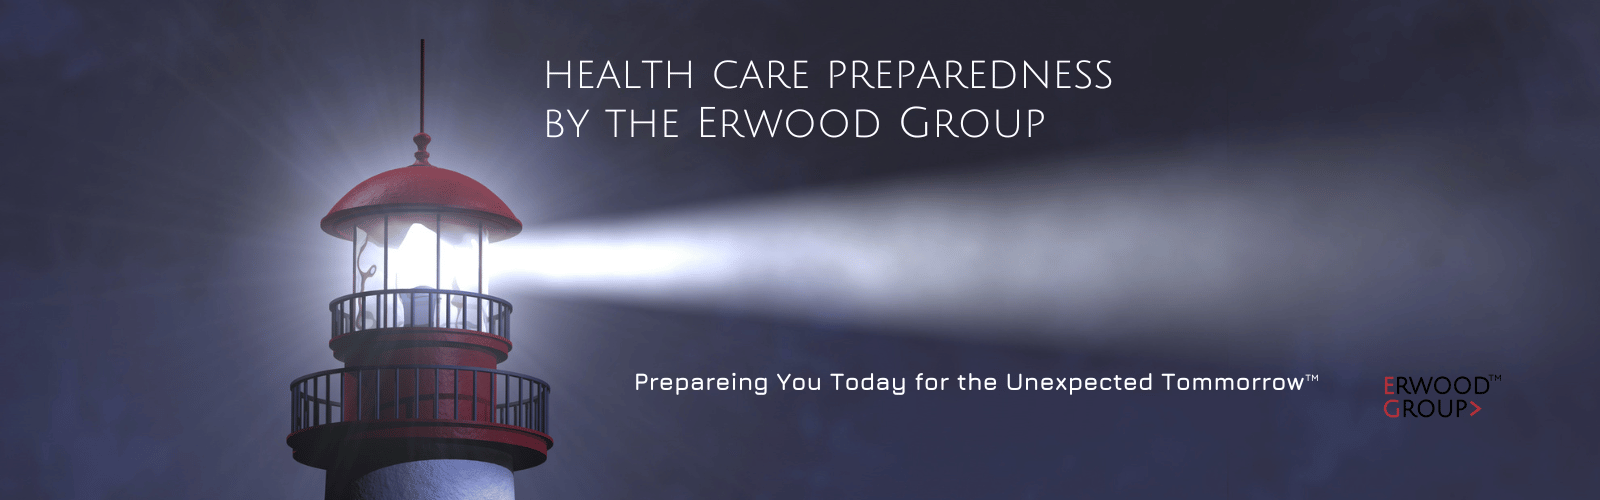 Health Care Preparedness